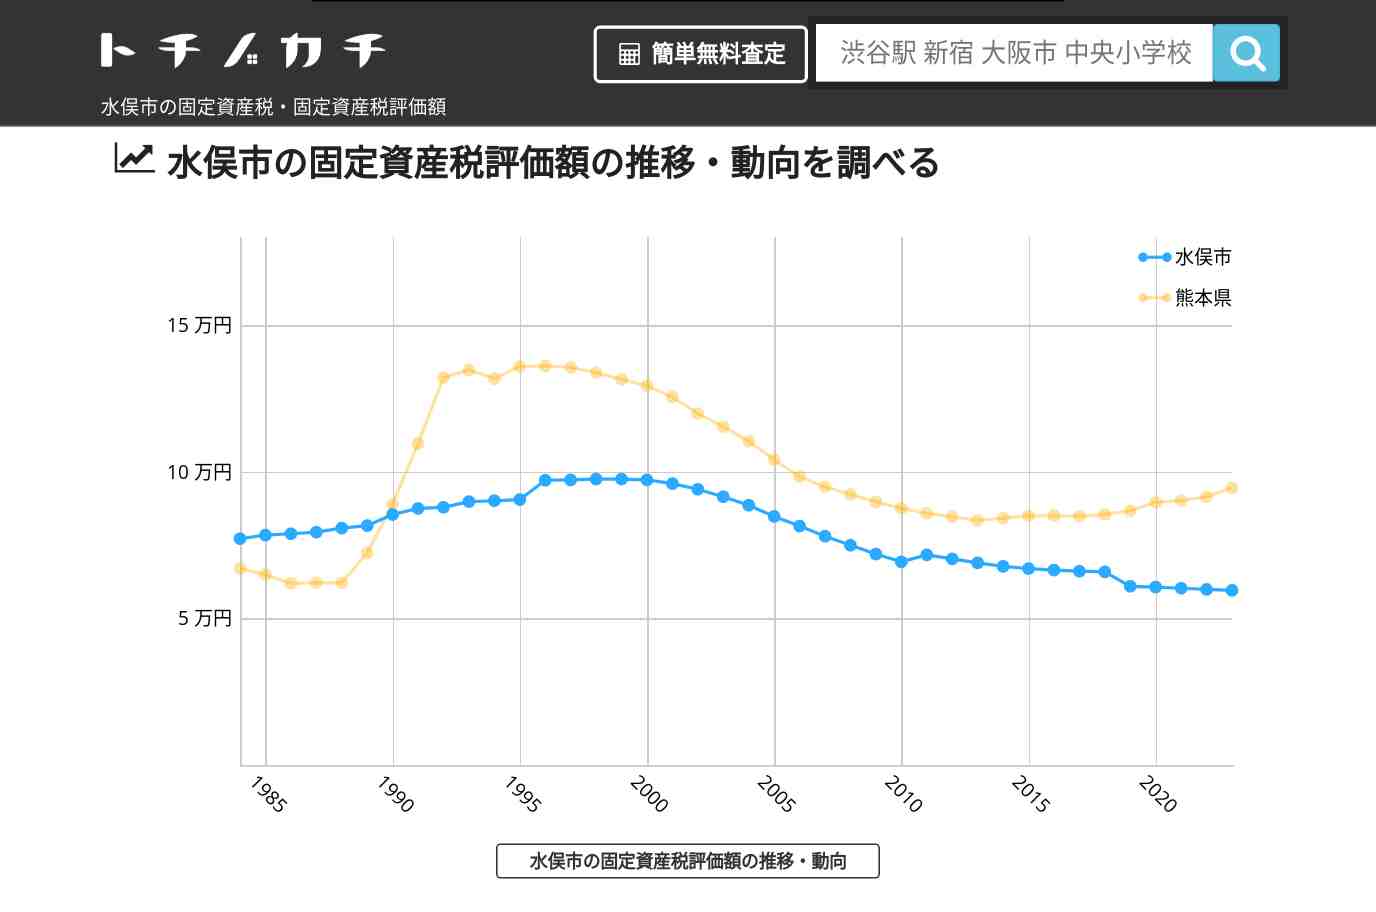 湯出小学校(熊本県 水俣市)周辺の固定資産税・固定資産税評価額 | トチノカチ